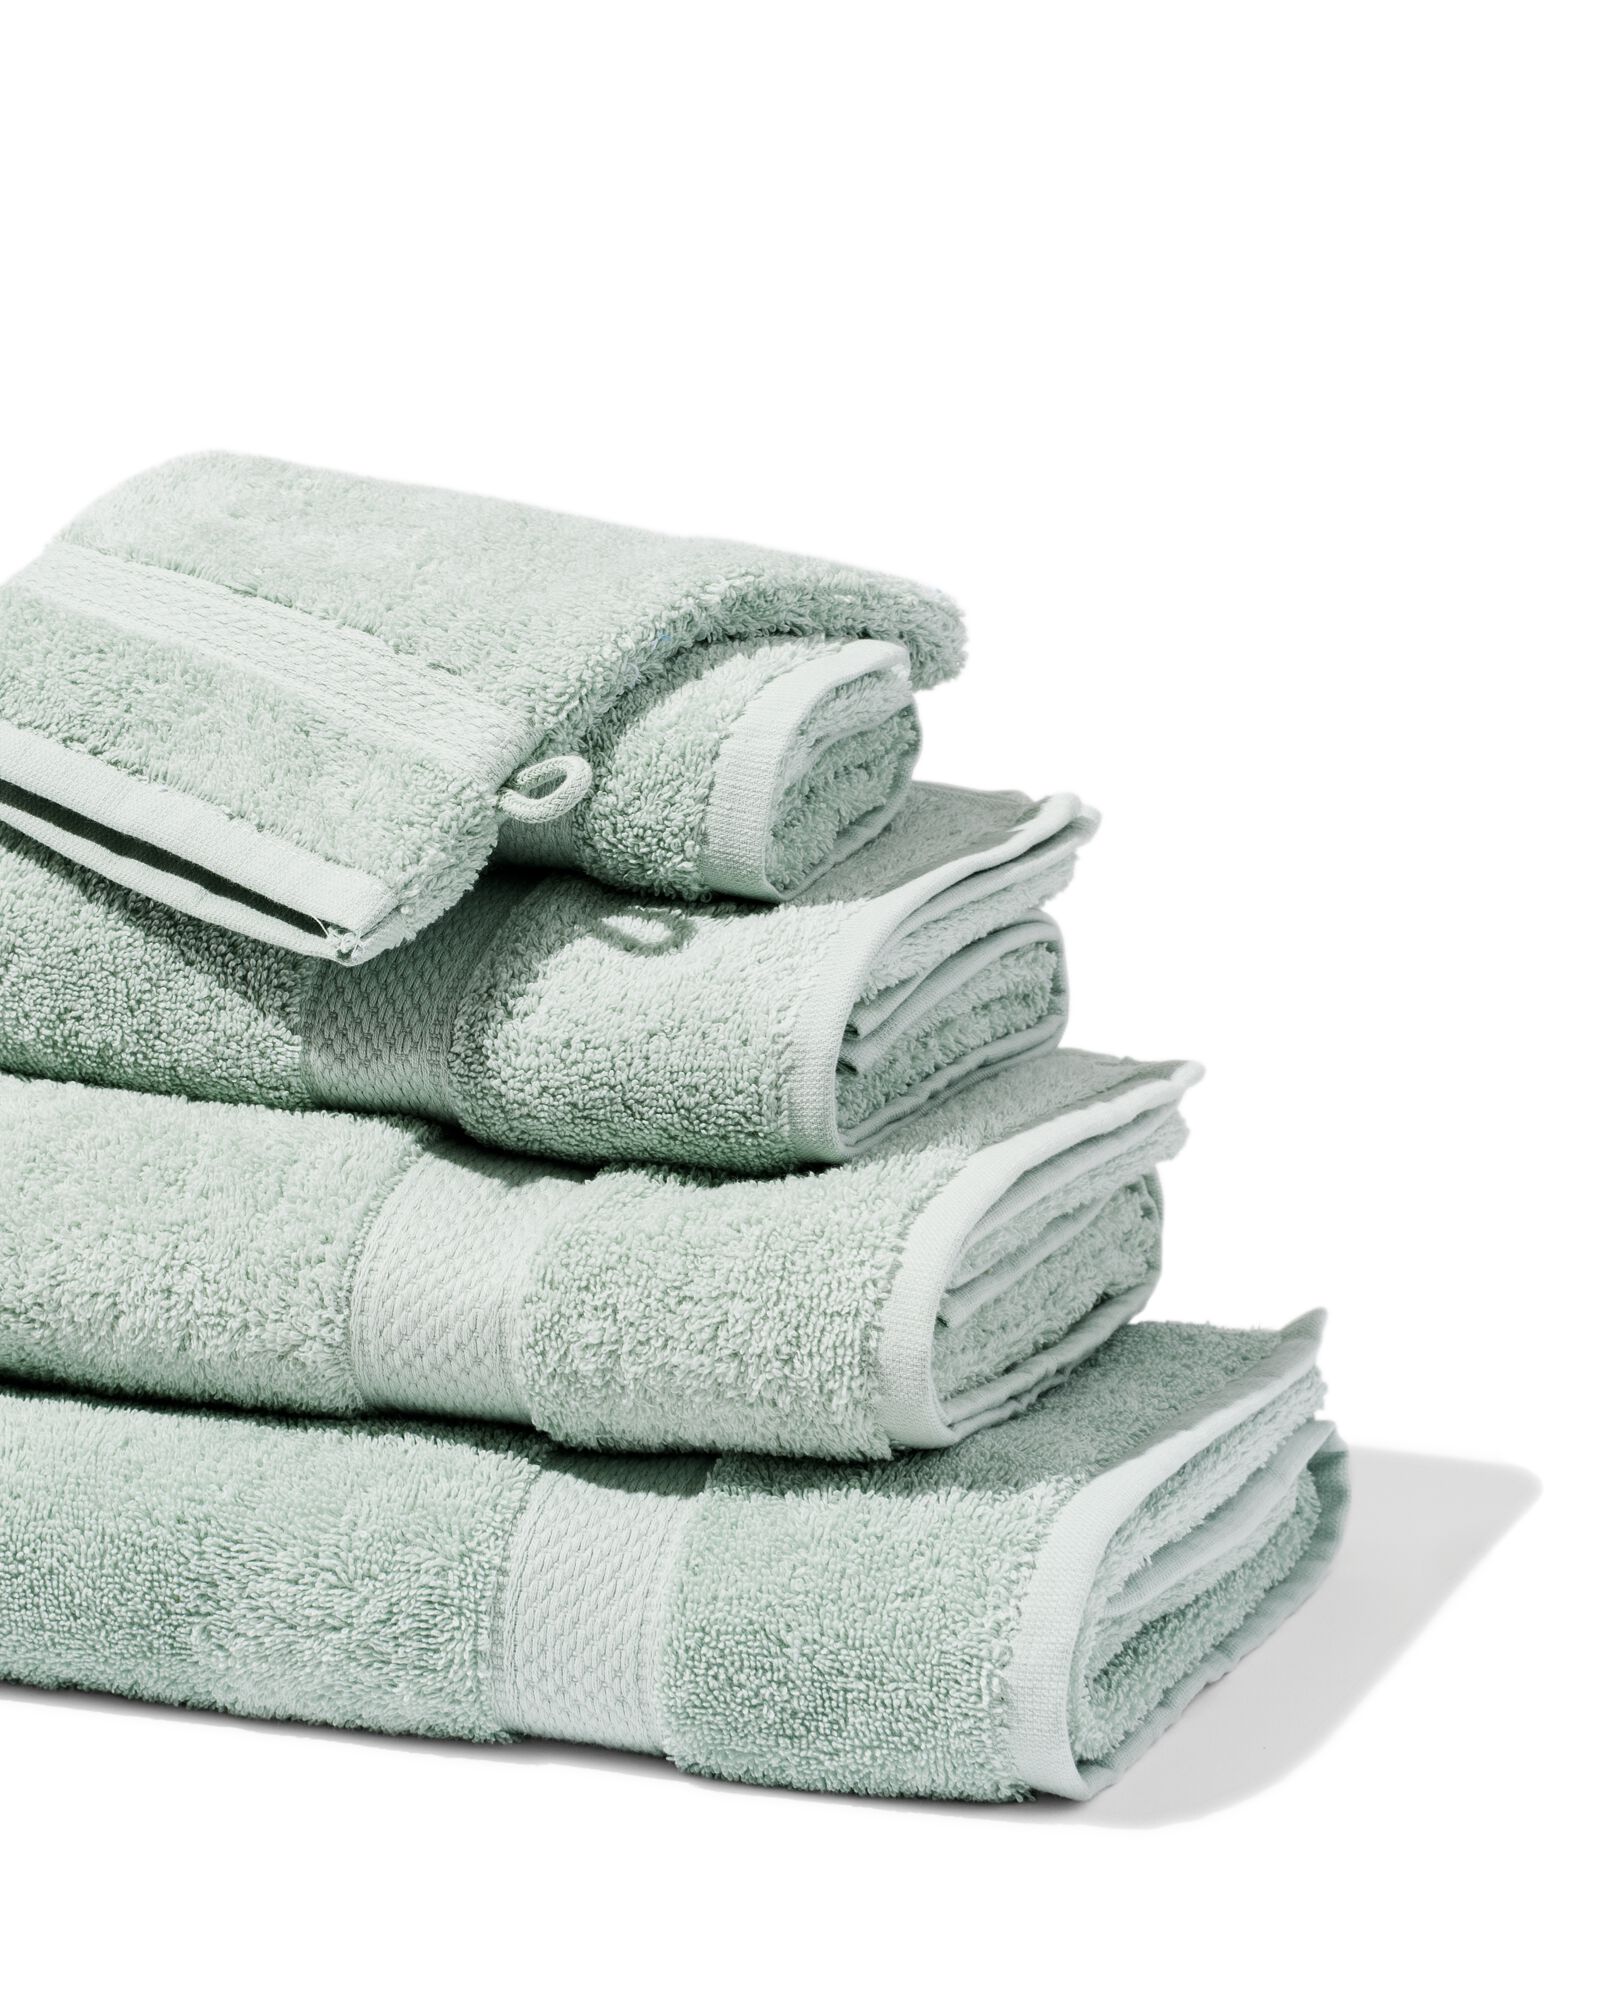 handdoeken - zware kwaliteit lichtgroen lichtgroen - 1000015745 - HEMA